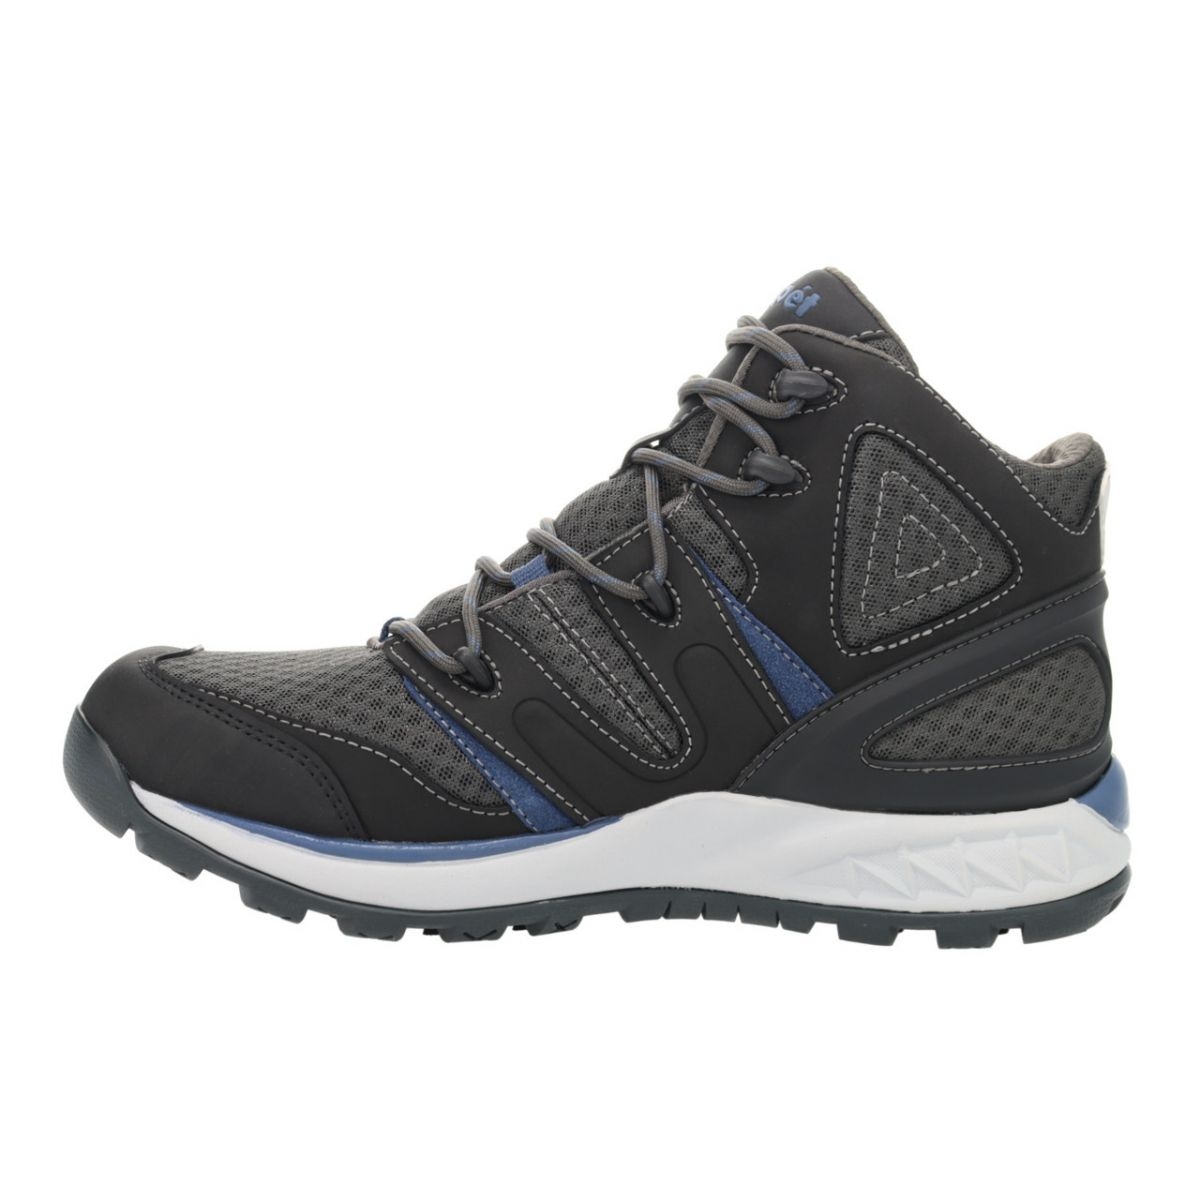 Propet Men's Veymont Waterproof Hiking Boot Grey/Blue - MOA022SGRB GREY/BLUE - GREY/BLUE, 9 X-Wide